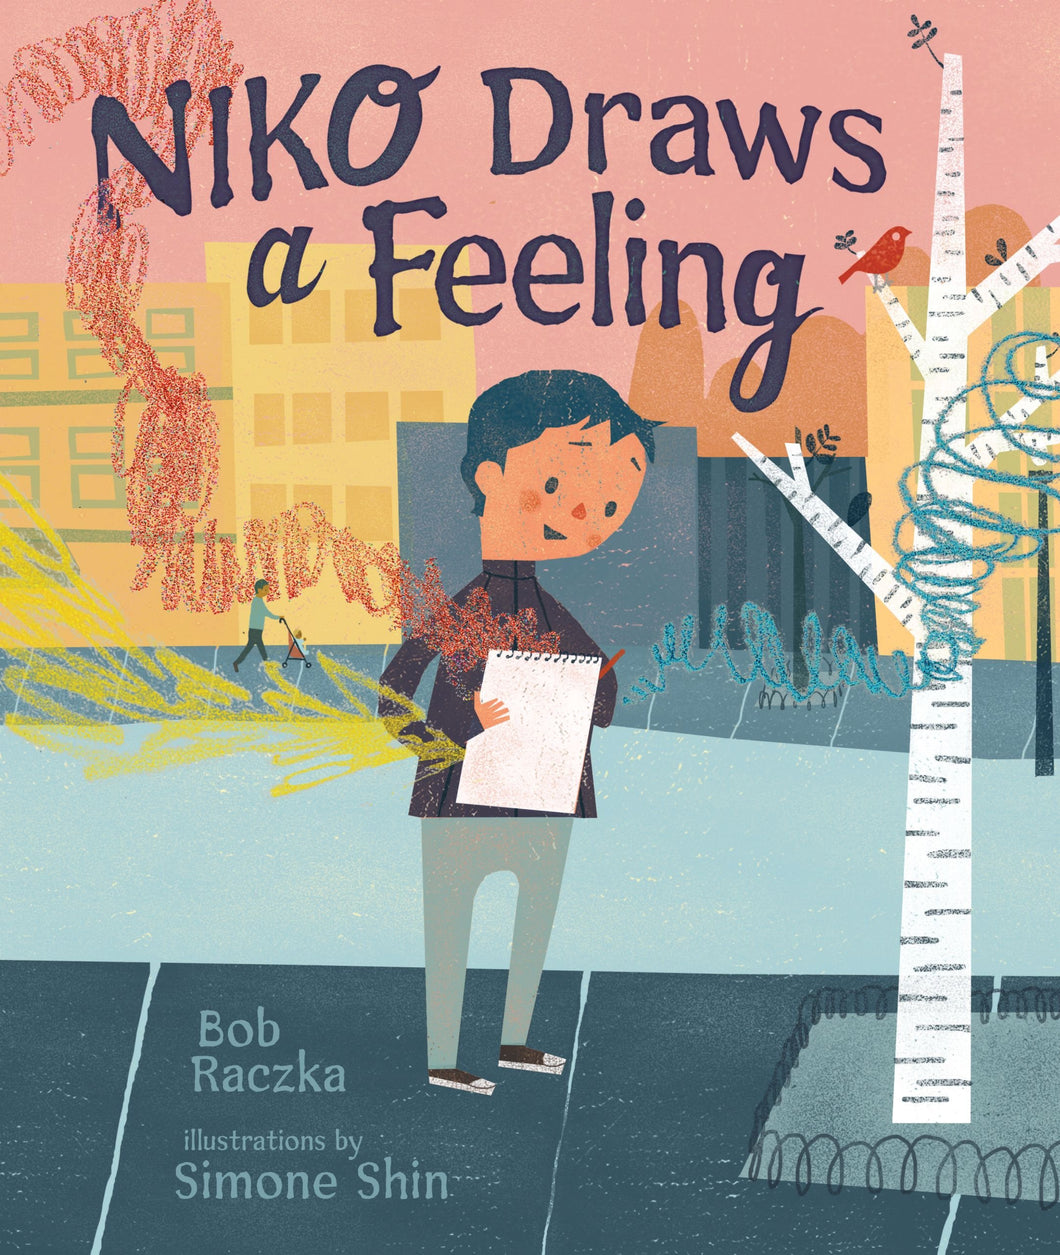 Niko Draws a Feeling by Robert Raczka